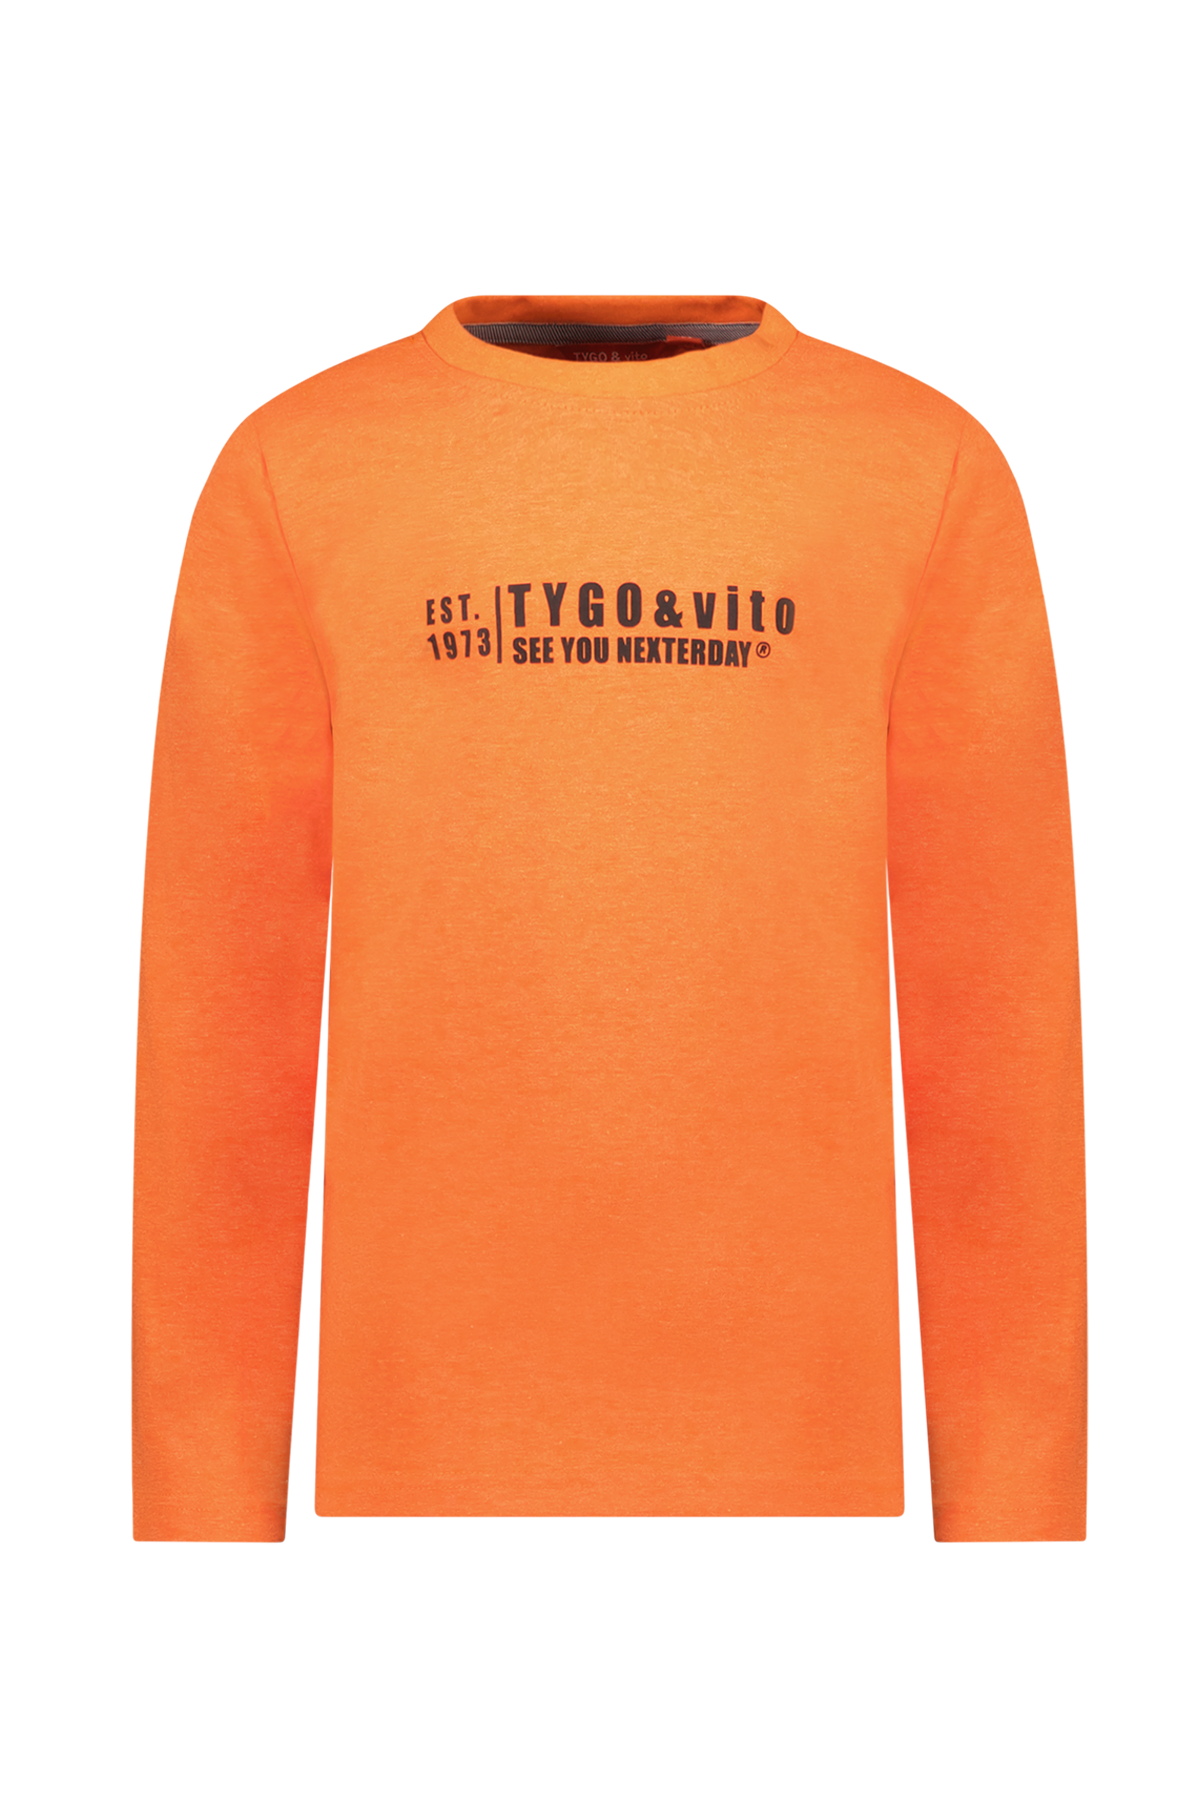 Longsleeve T-shirt lange mouw Dani oranje clownfish